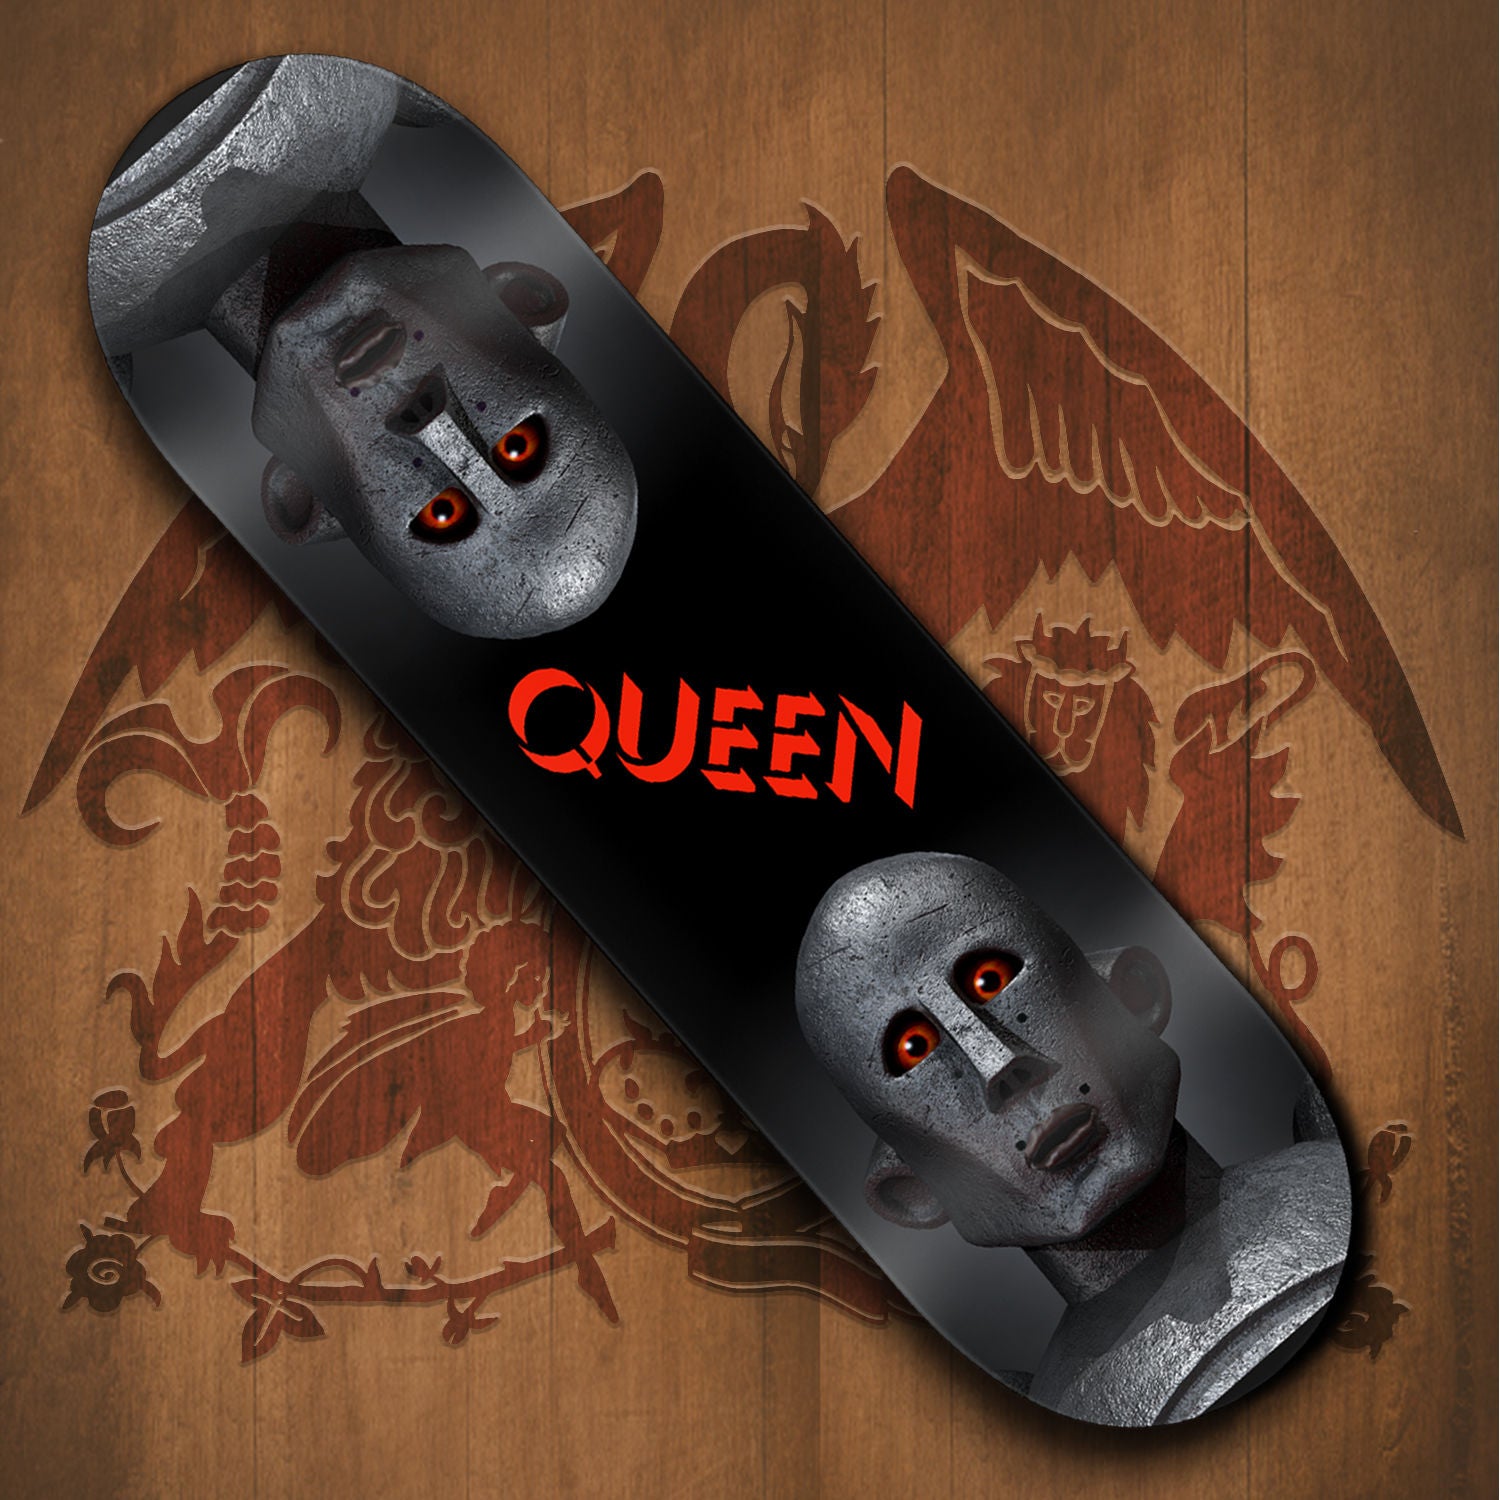 Queen - Queen Limited Edition Skate Deck 'Frank'